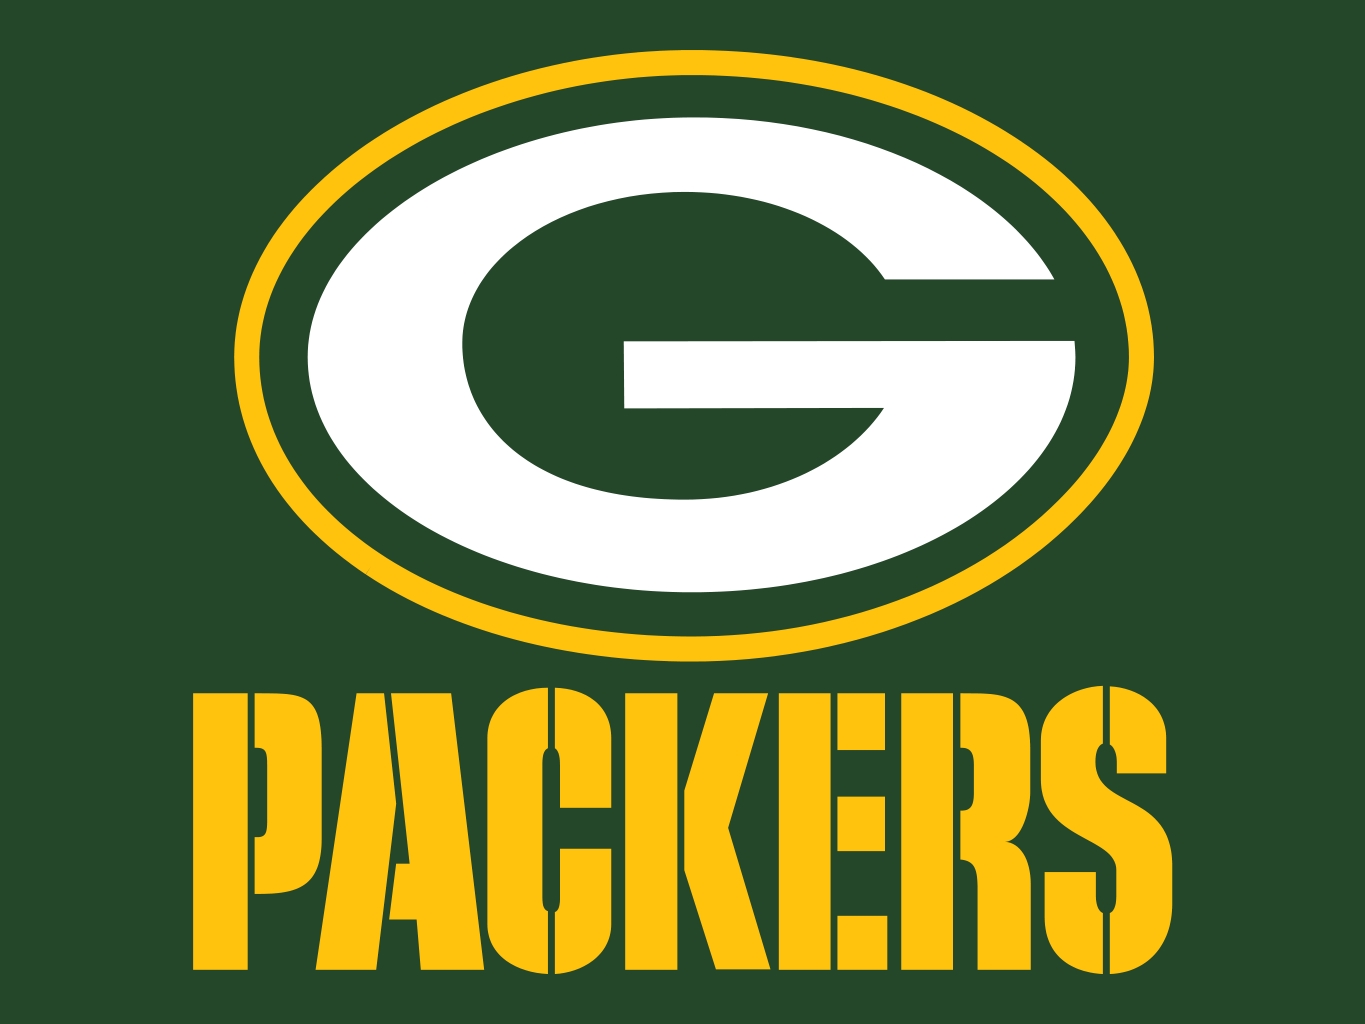 Green Bay Packers Future Media News